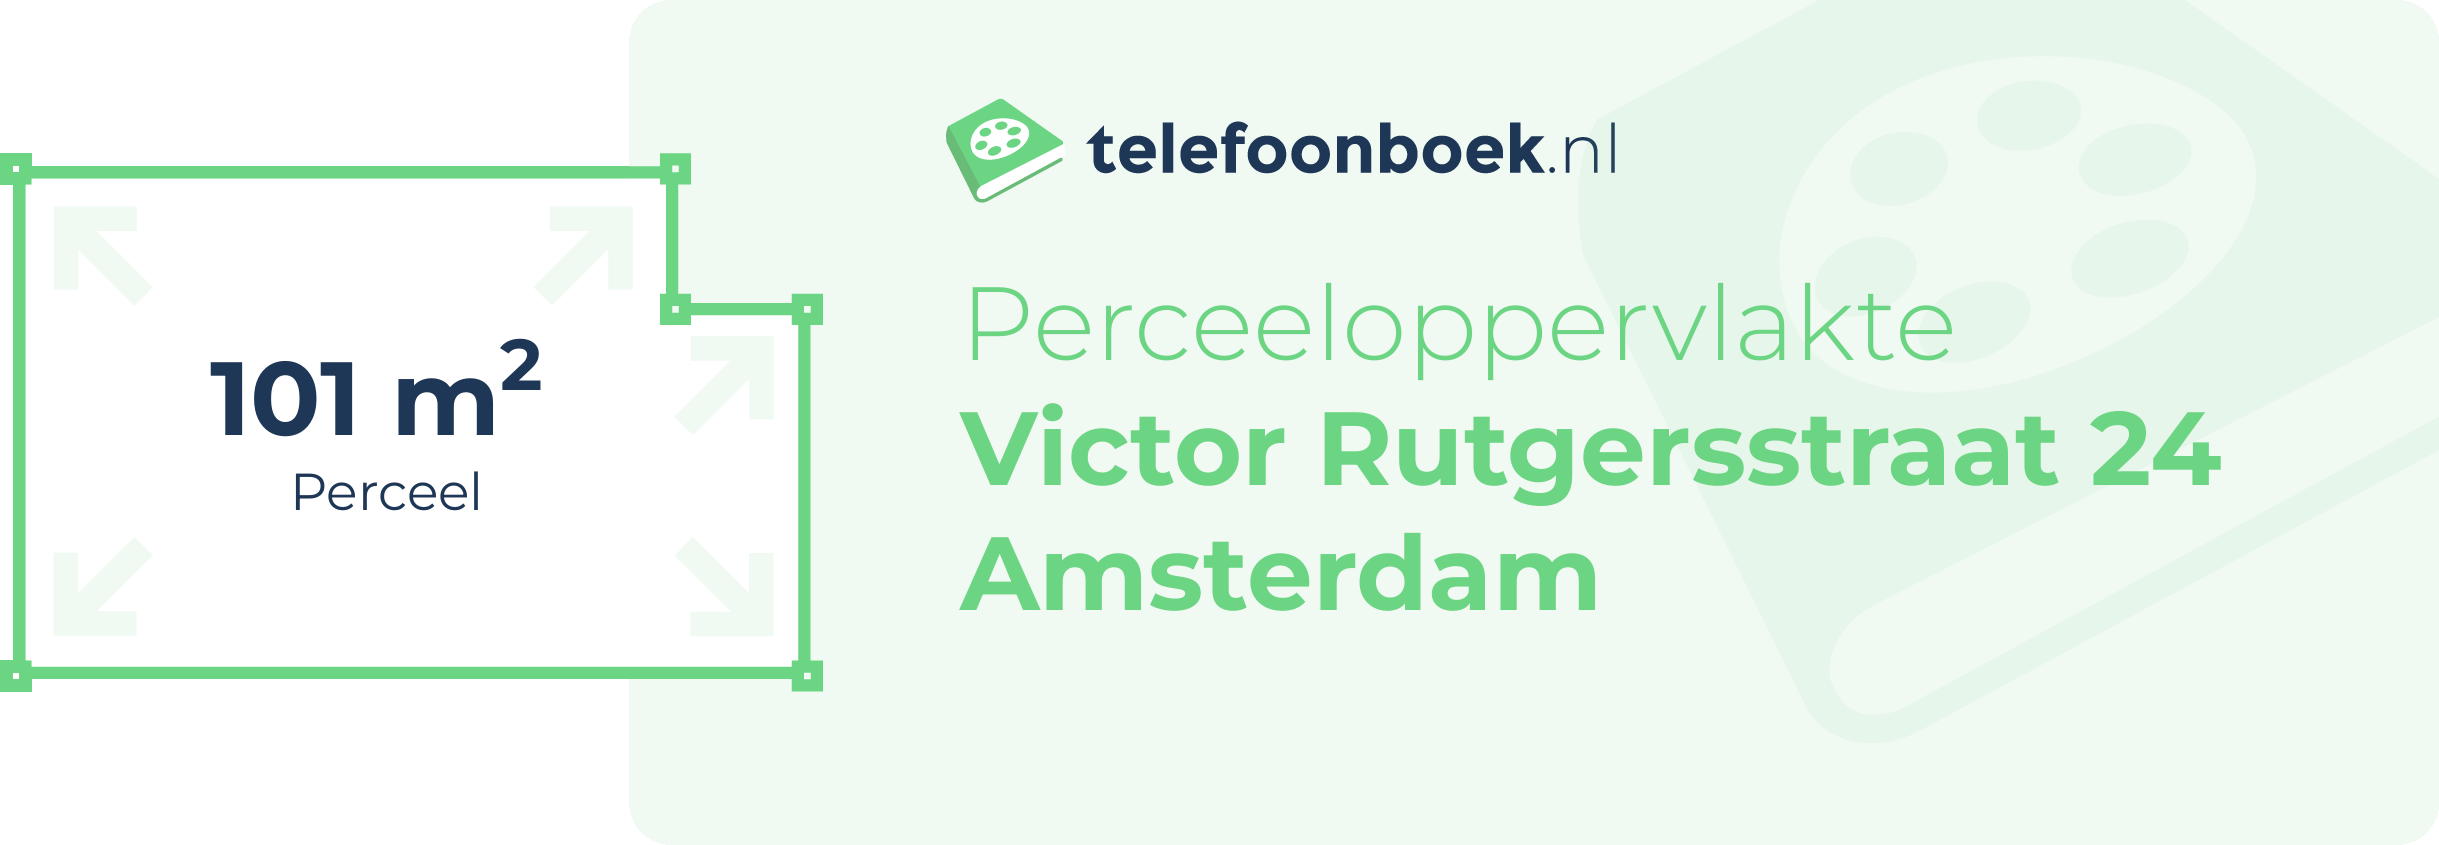 Perceeloppervlakte Victor Rutgersstraat 24 Amsterdam